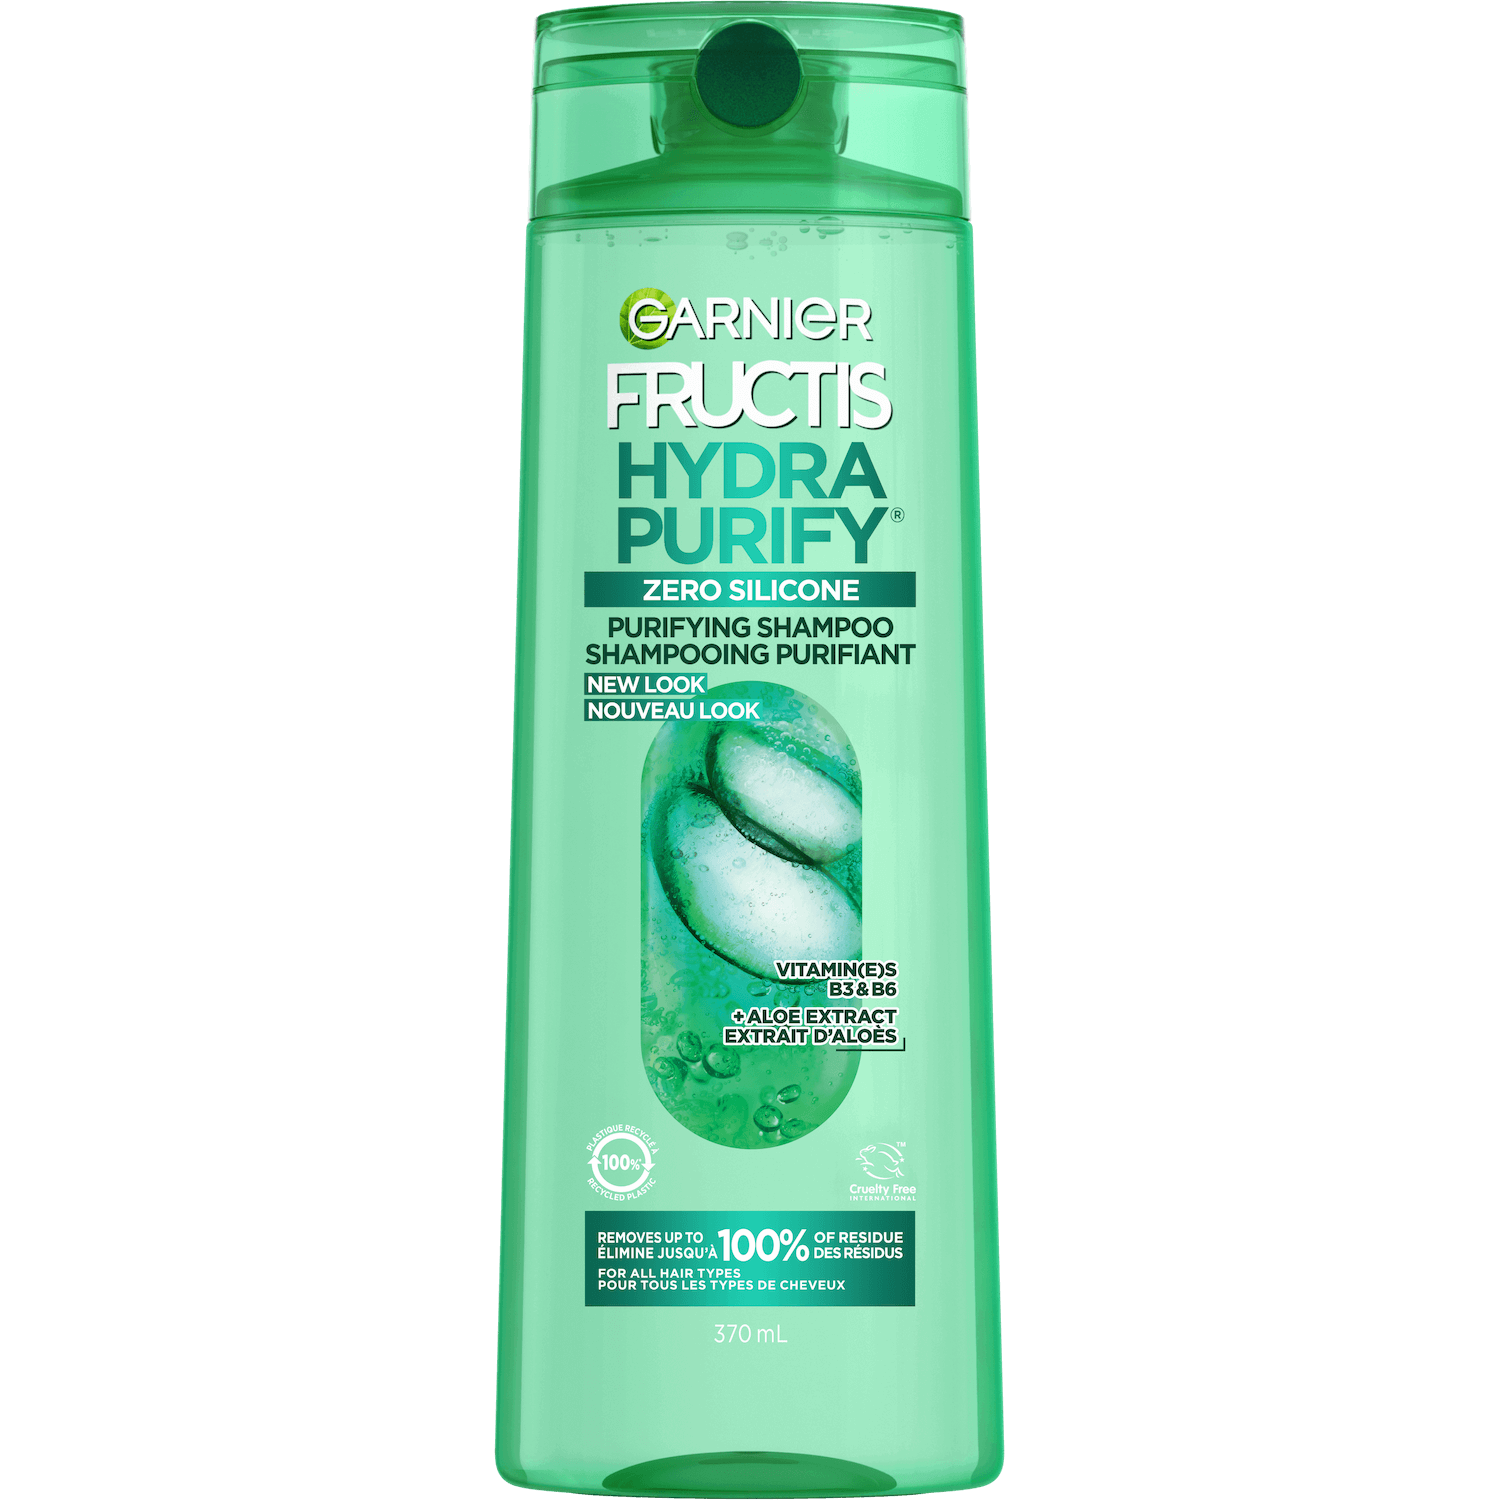 GAR 3D PKG Fructis Reno 2022 HydraPurify Shampoo Front 370mL min